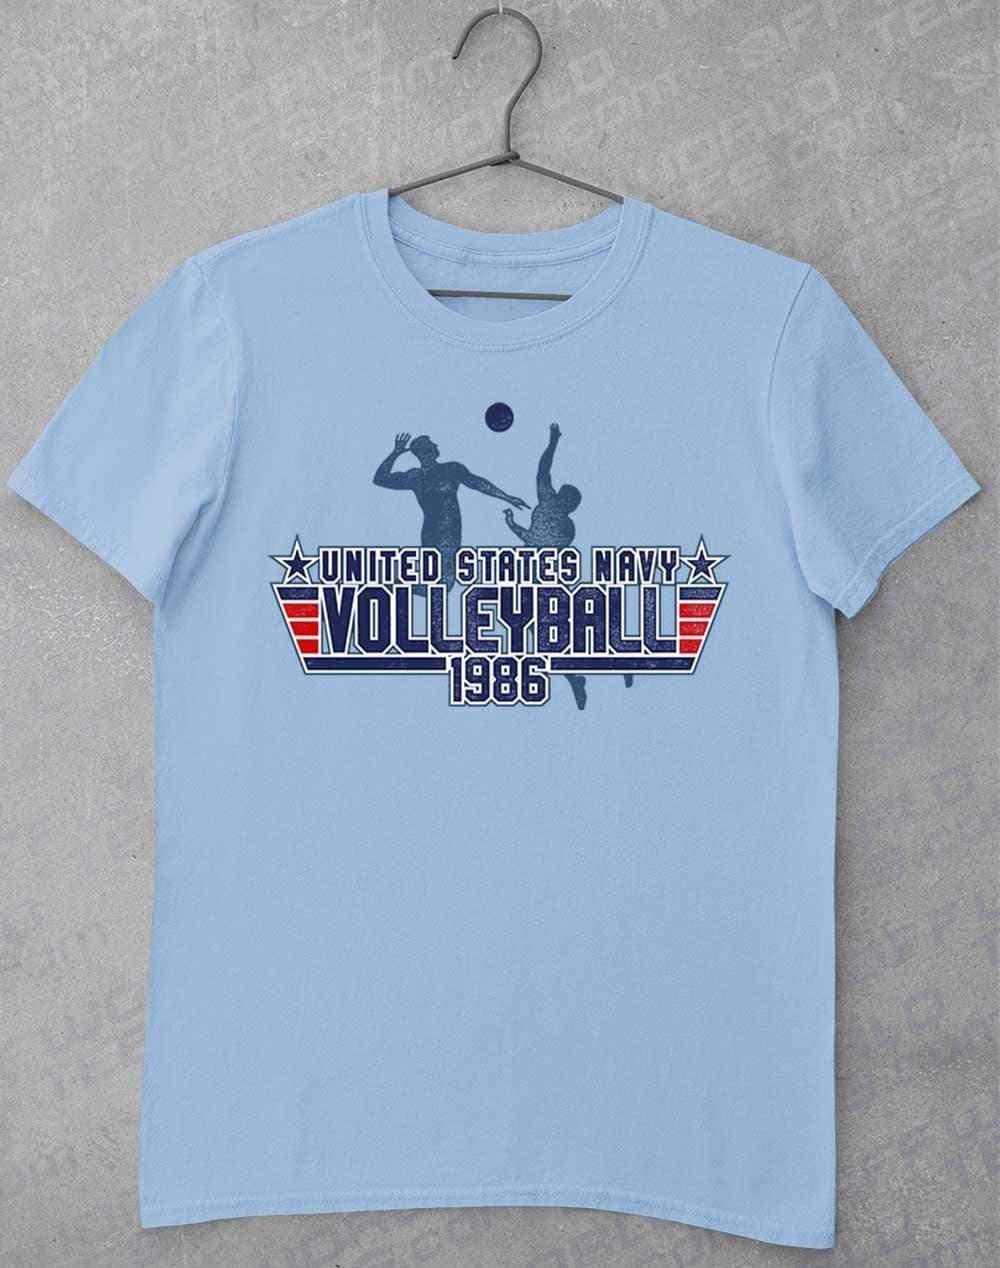 US Navy Volleyball 1986 T-Shirt S / Light Blue  - Off World Tees